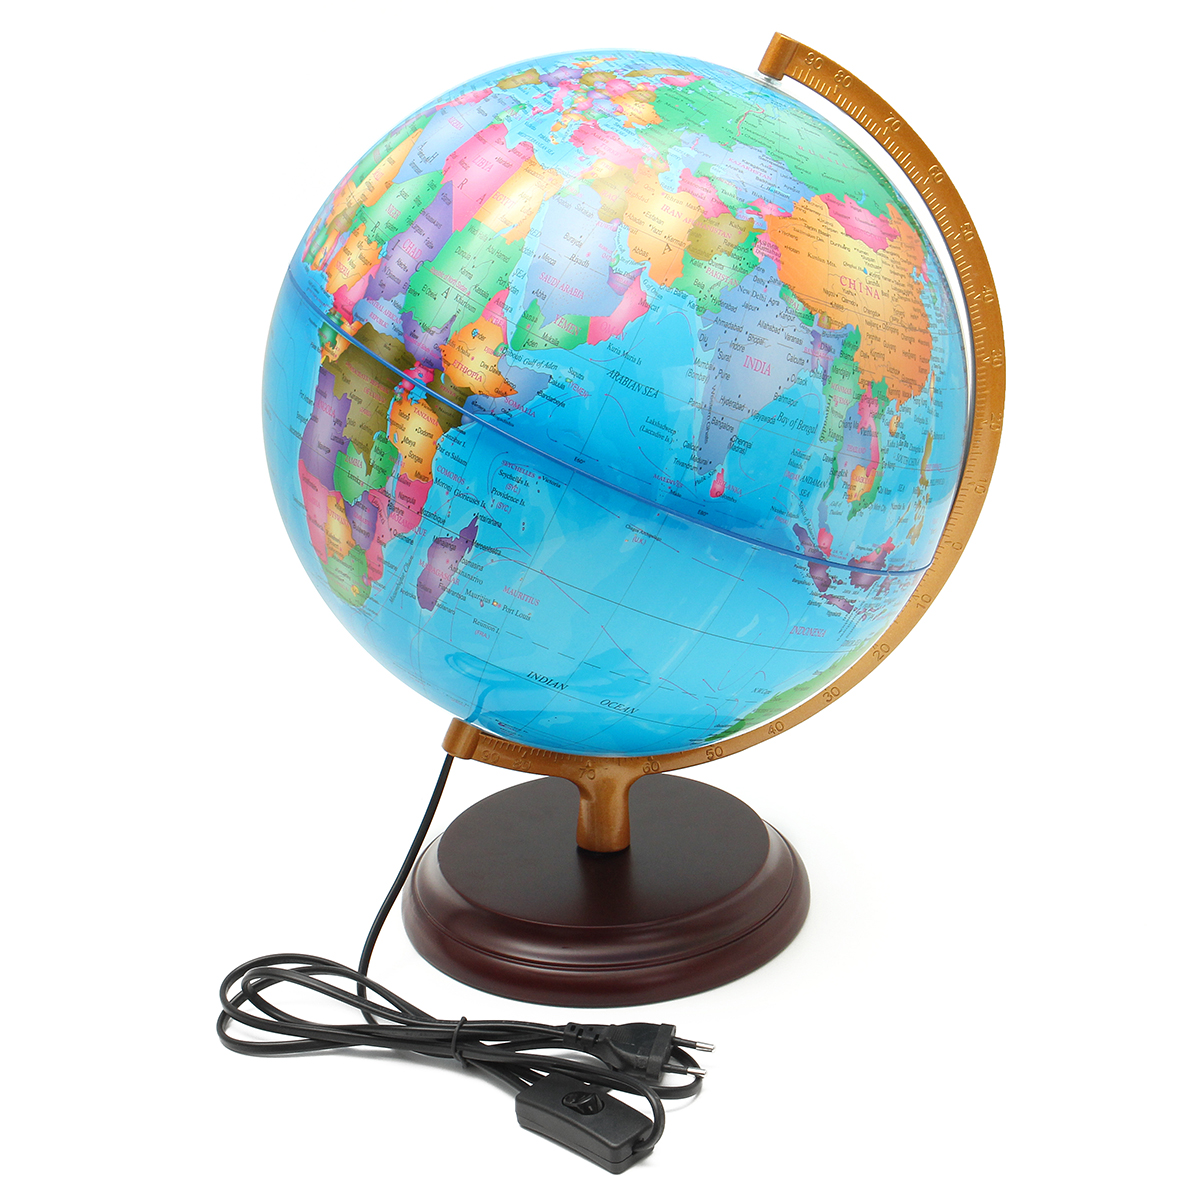 125quot-World-Earth-Globe-Map-Geography-LED-Illuminated-for-Desktop-Decoration-Education-Kids-Gift-1252283-1